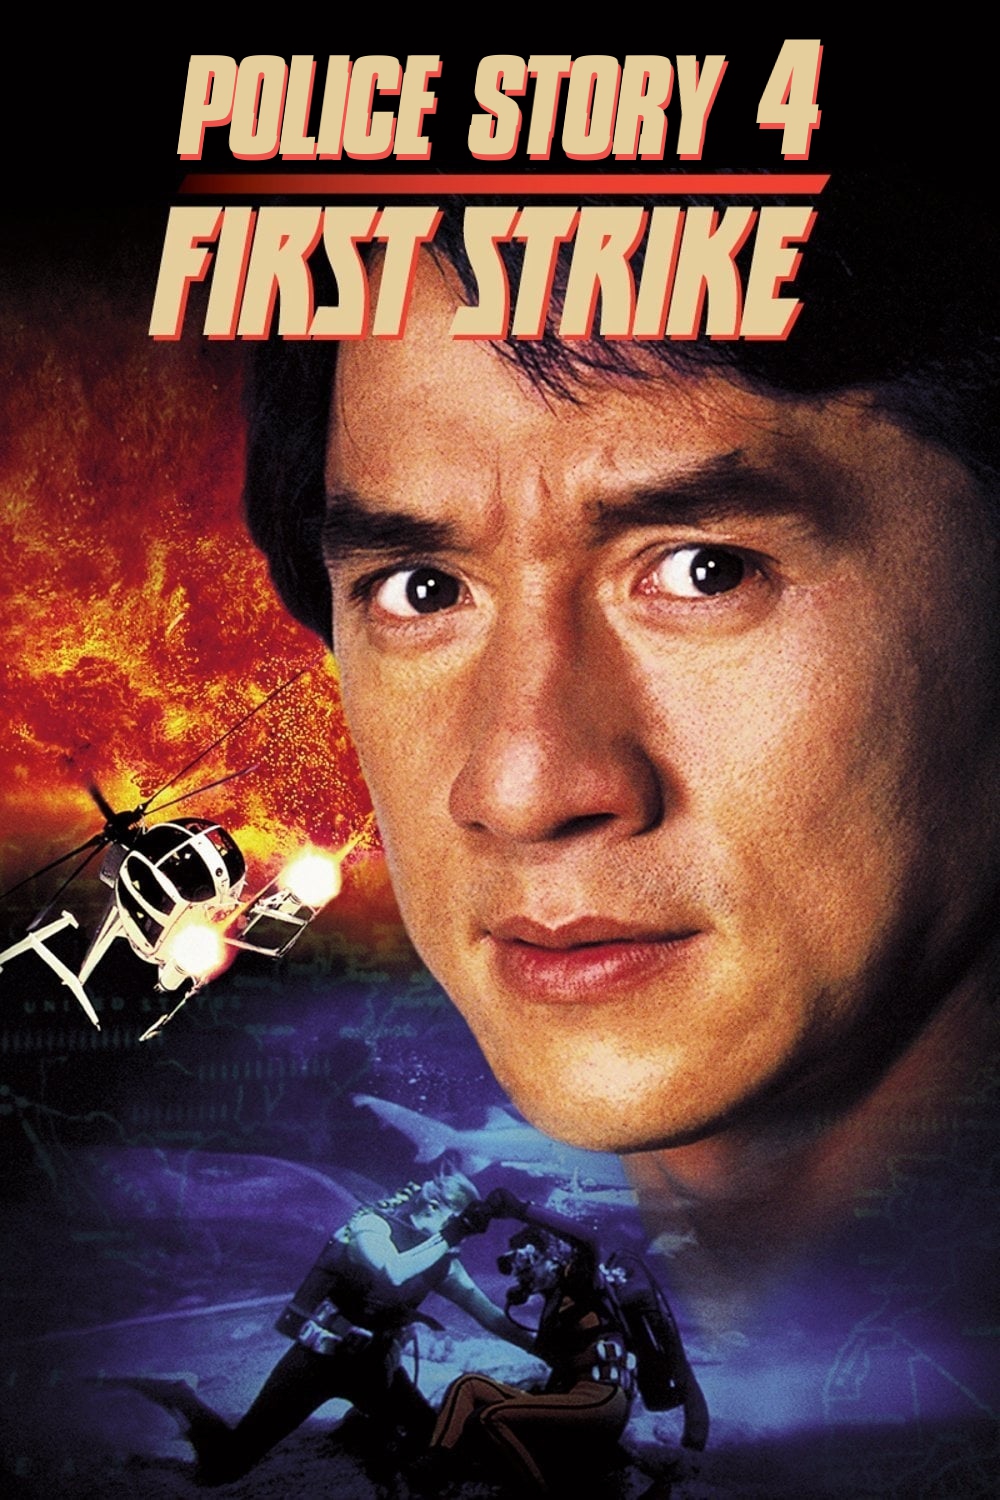 Police story 4: First strike [HD] (1997)